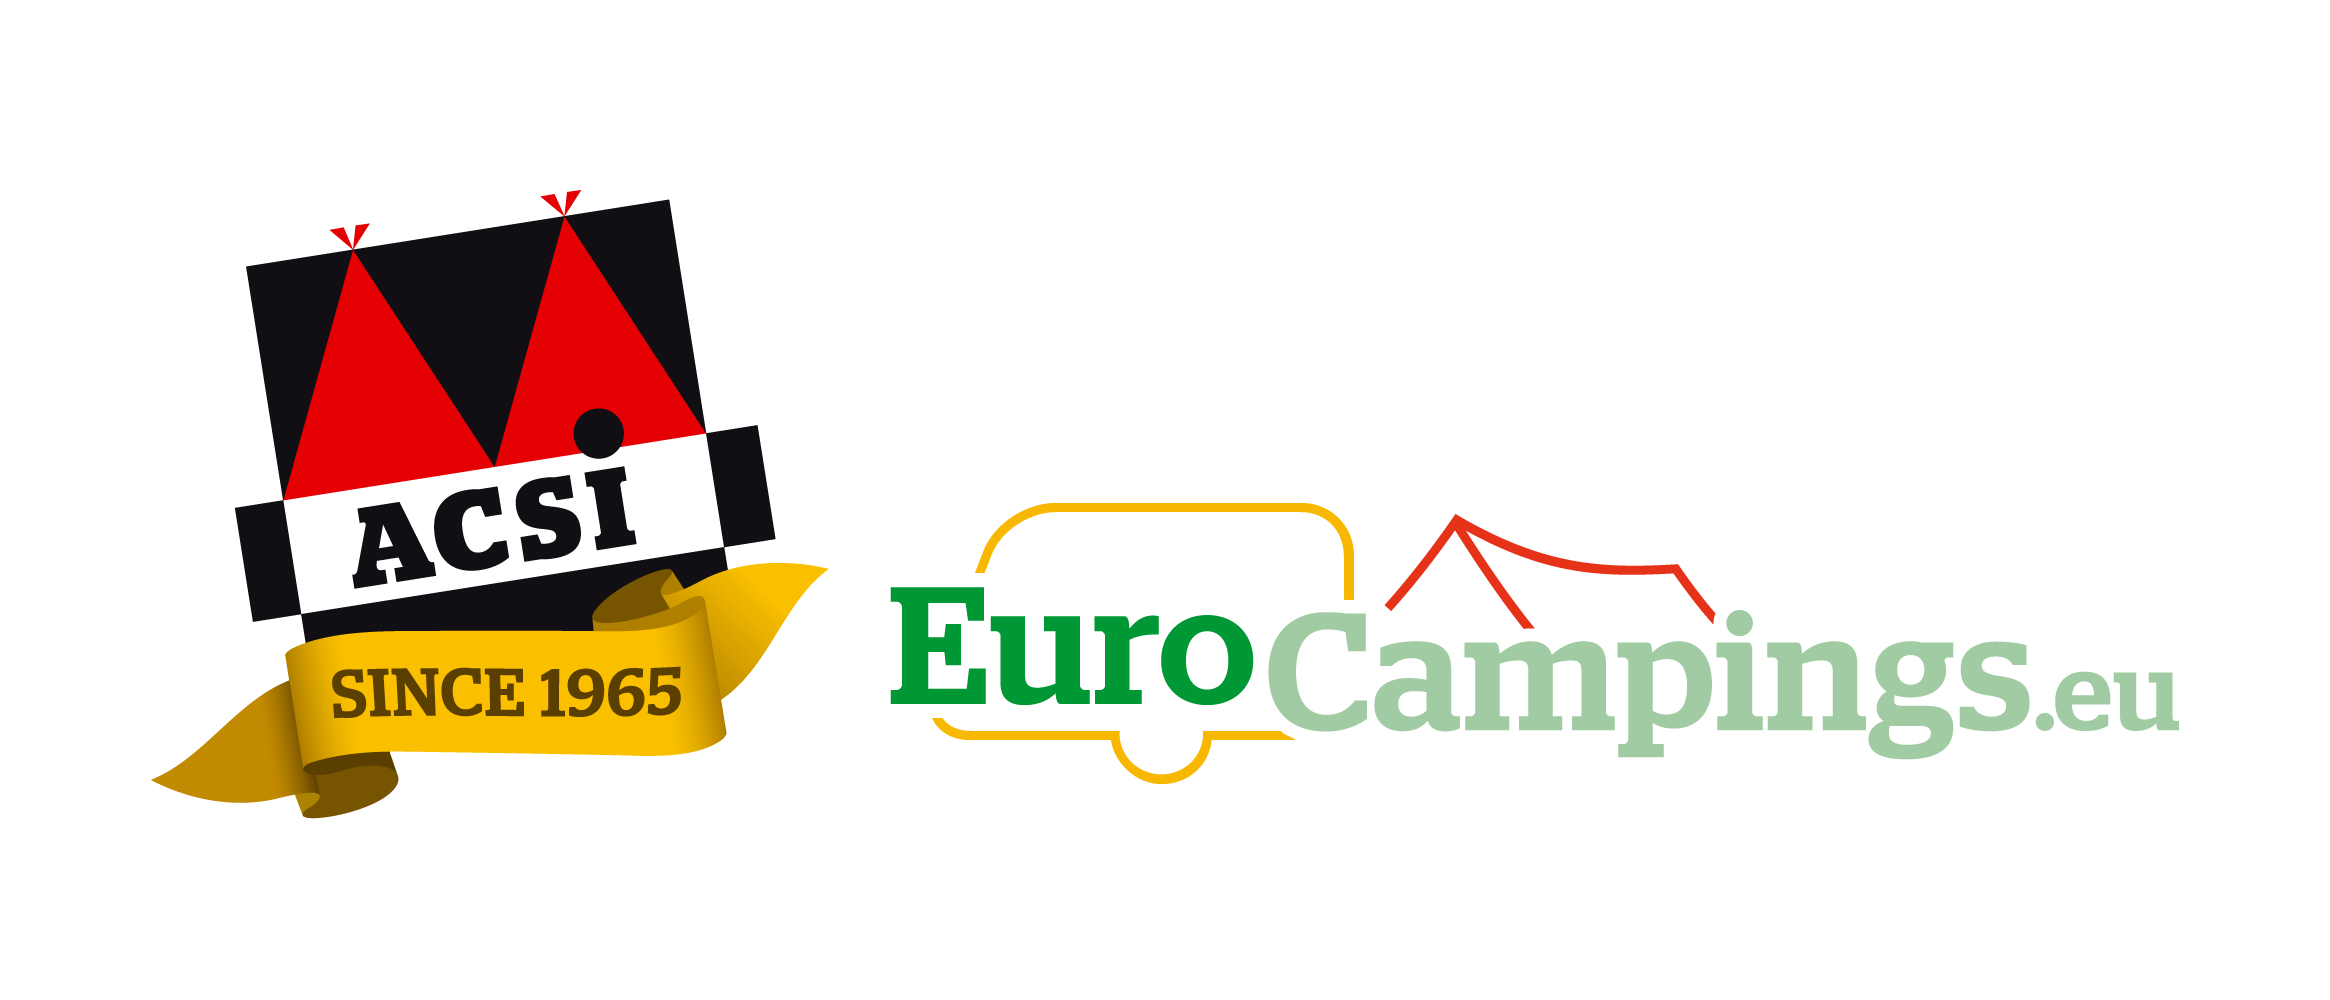 ACSI Eurocampings.nl